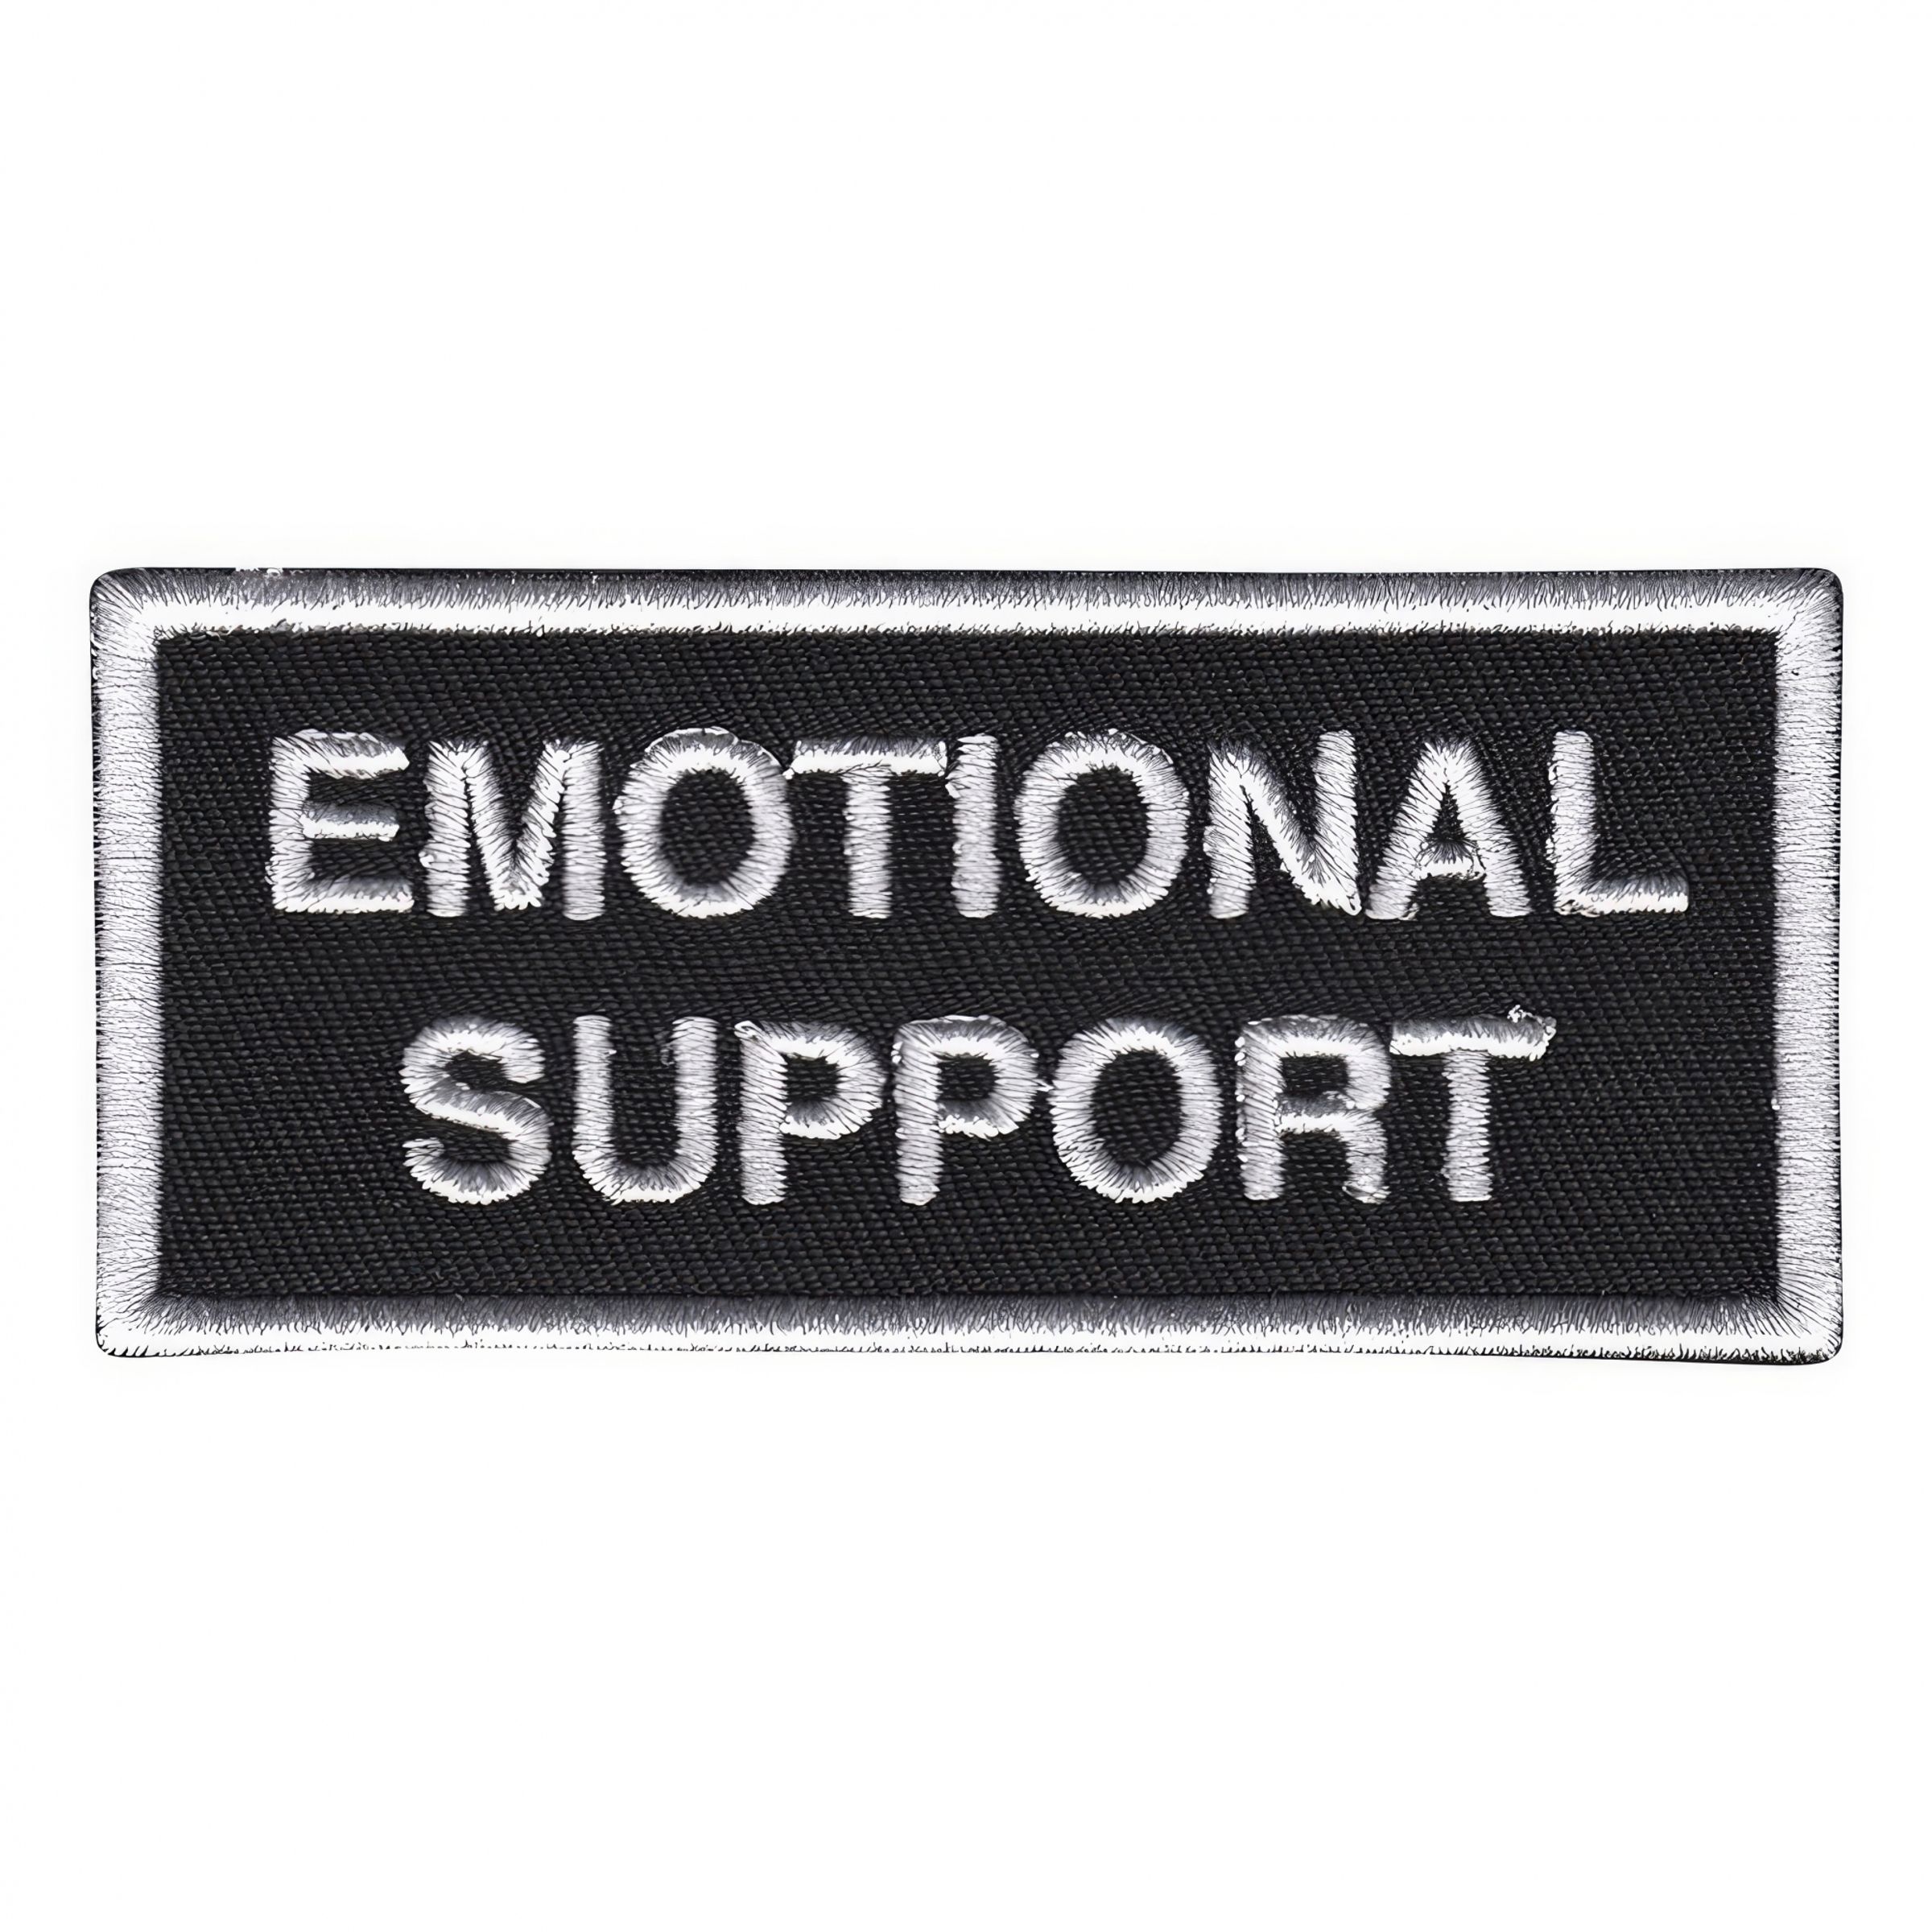 Tygmärke Emotional Support